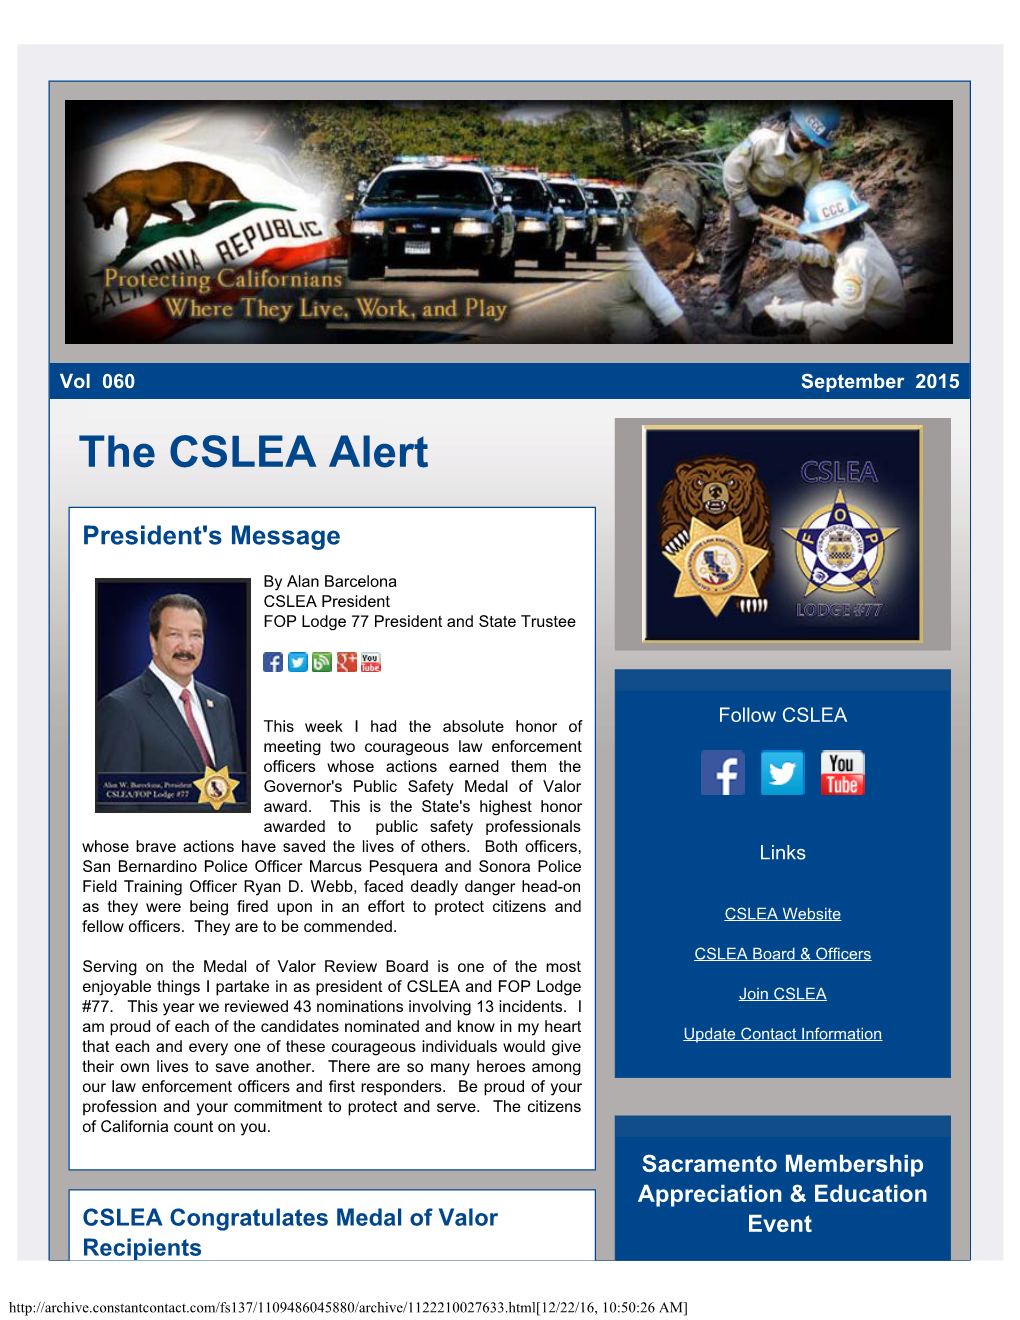 The CSLEA Alert